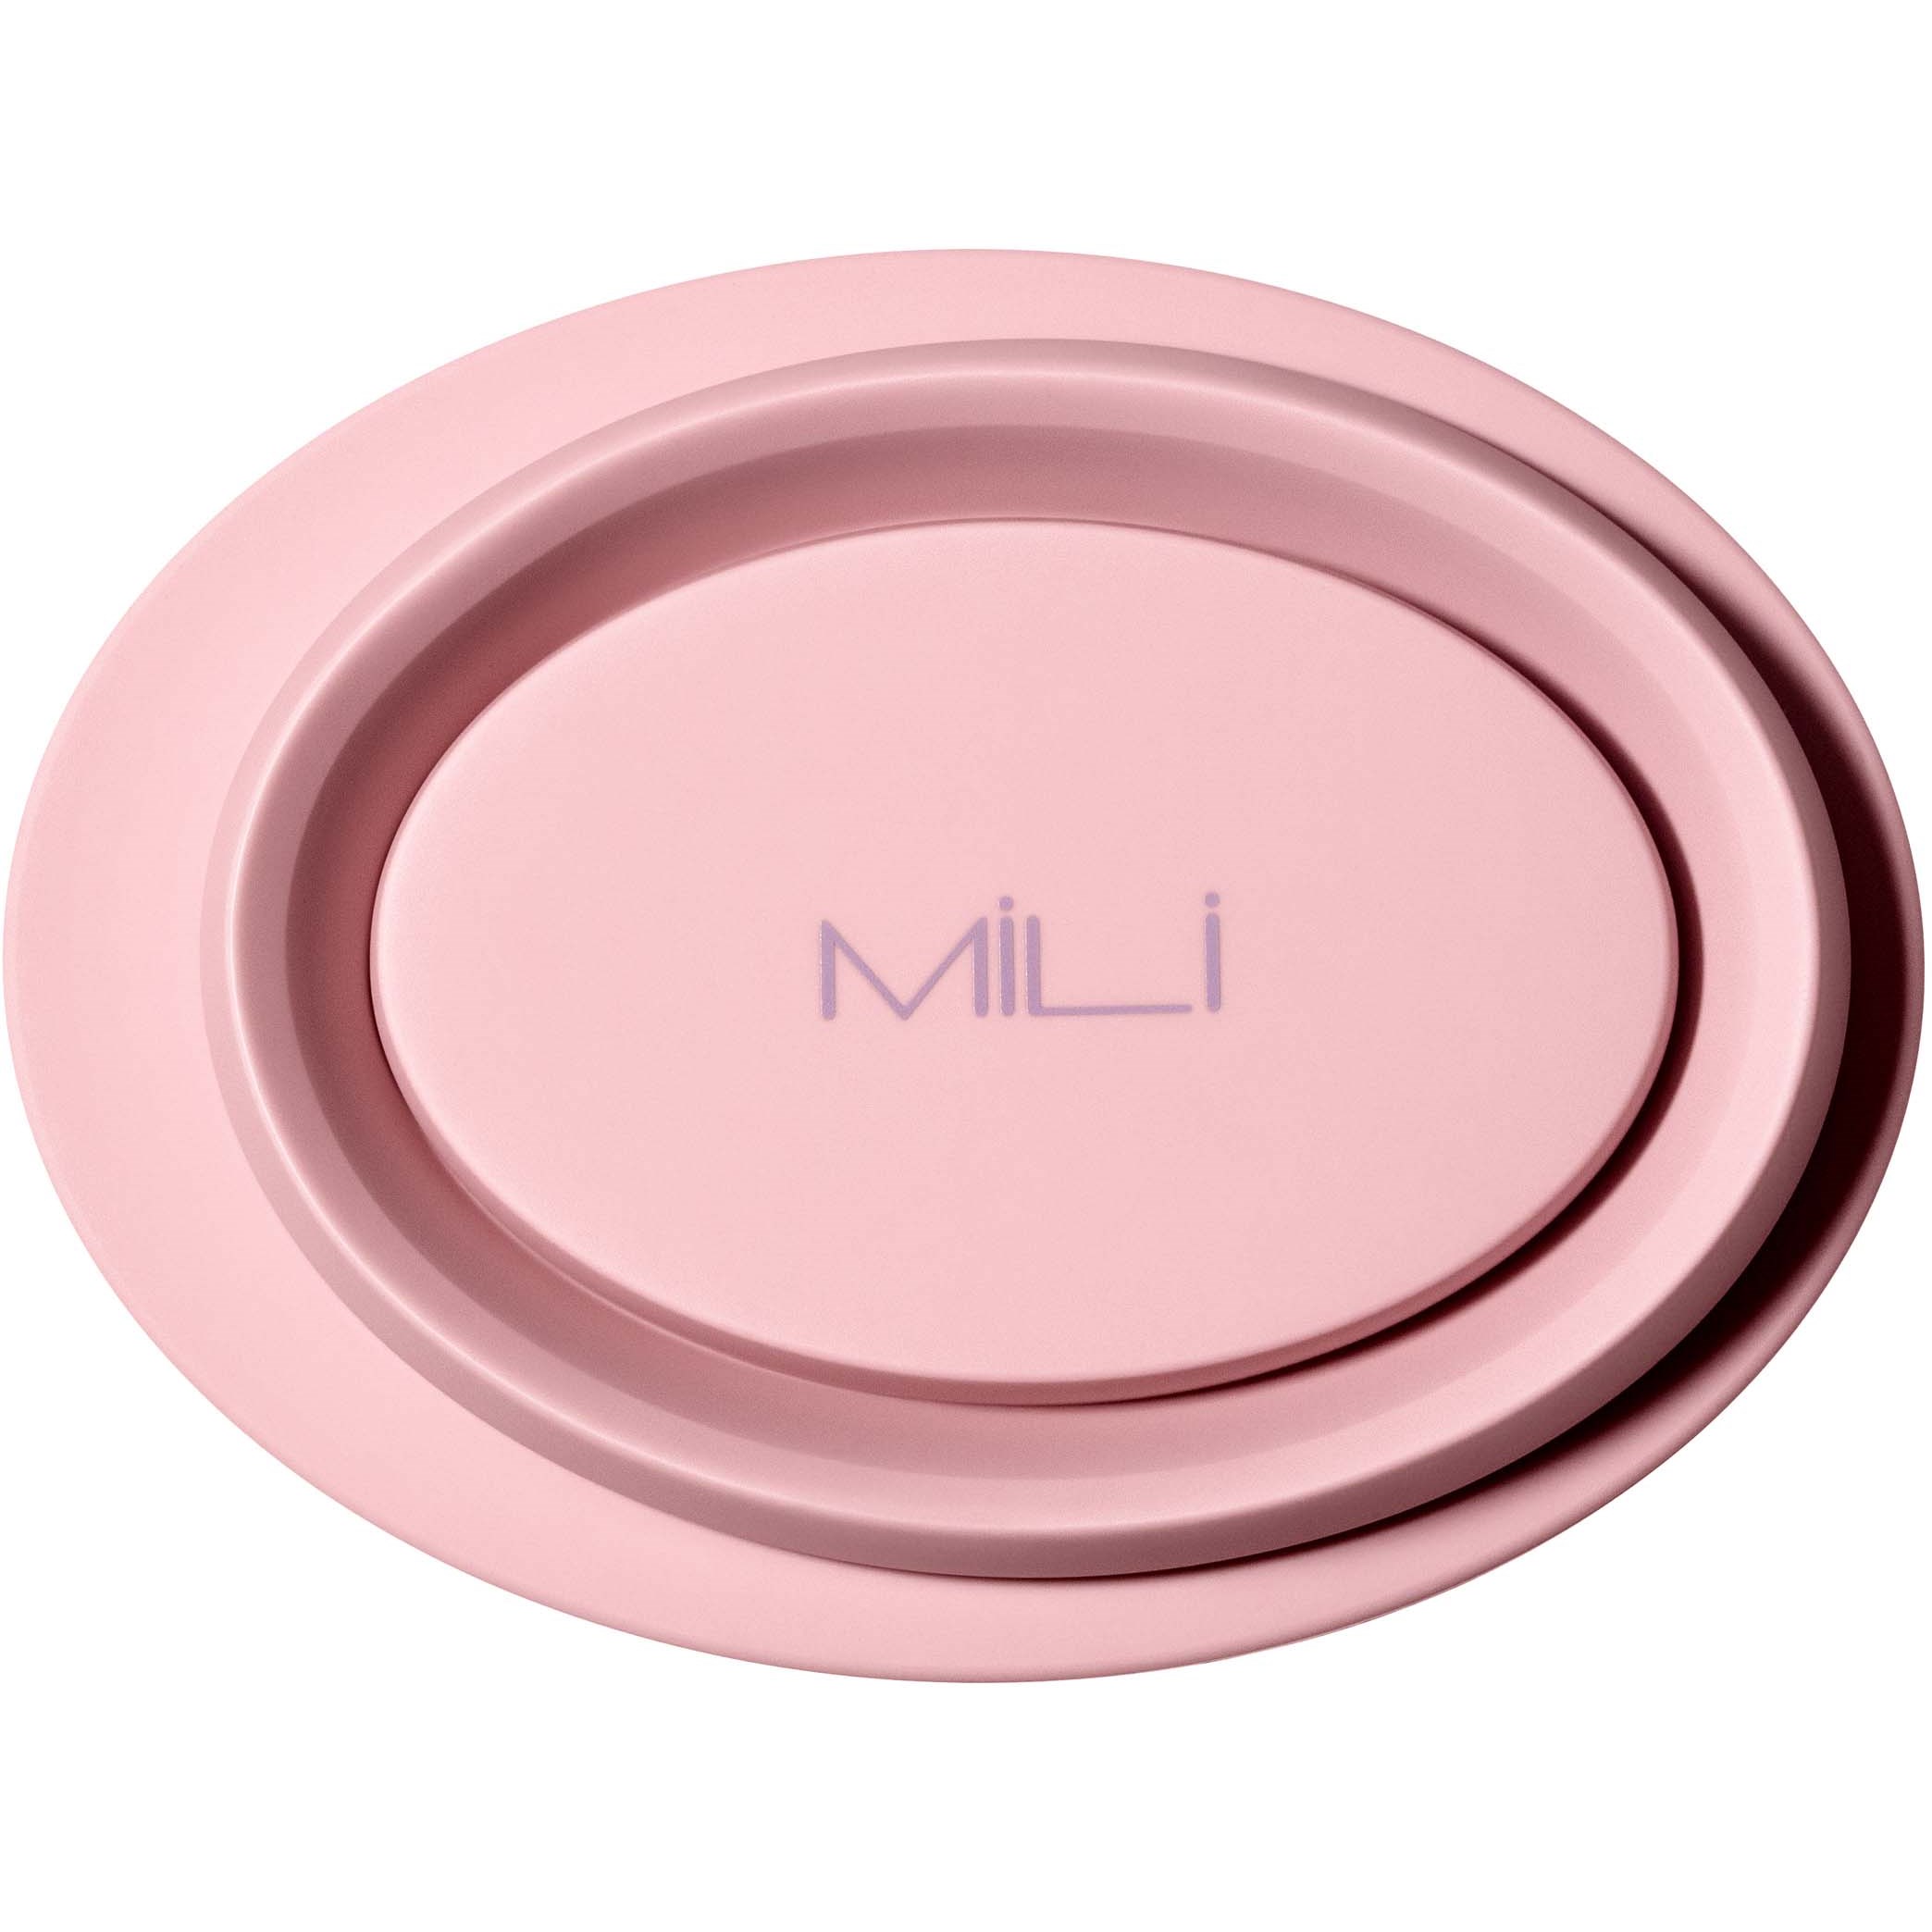 MILI Cosmetics Brush Cleaning Pad